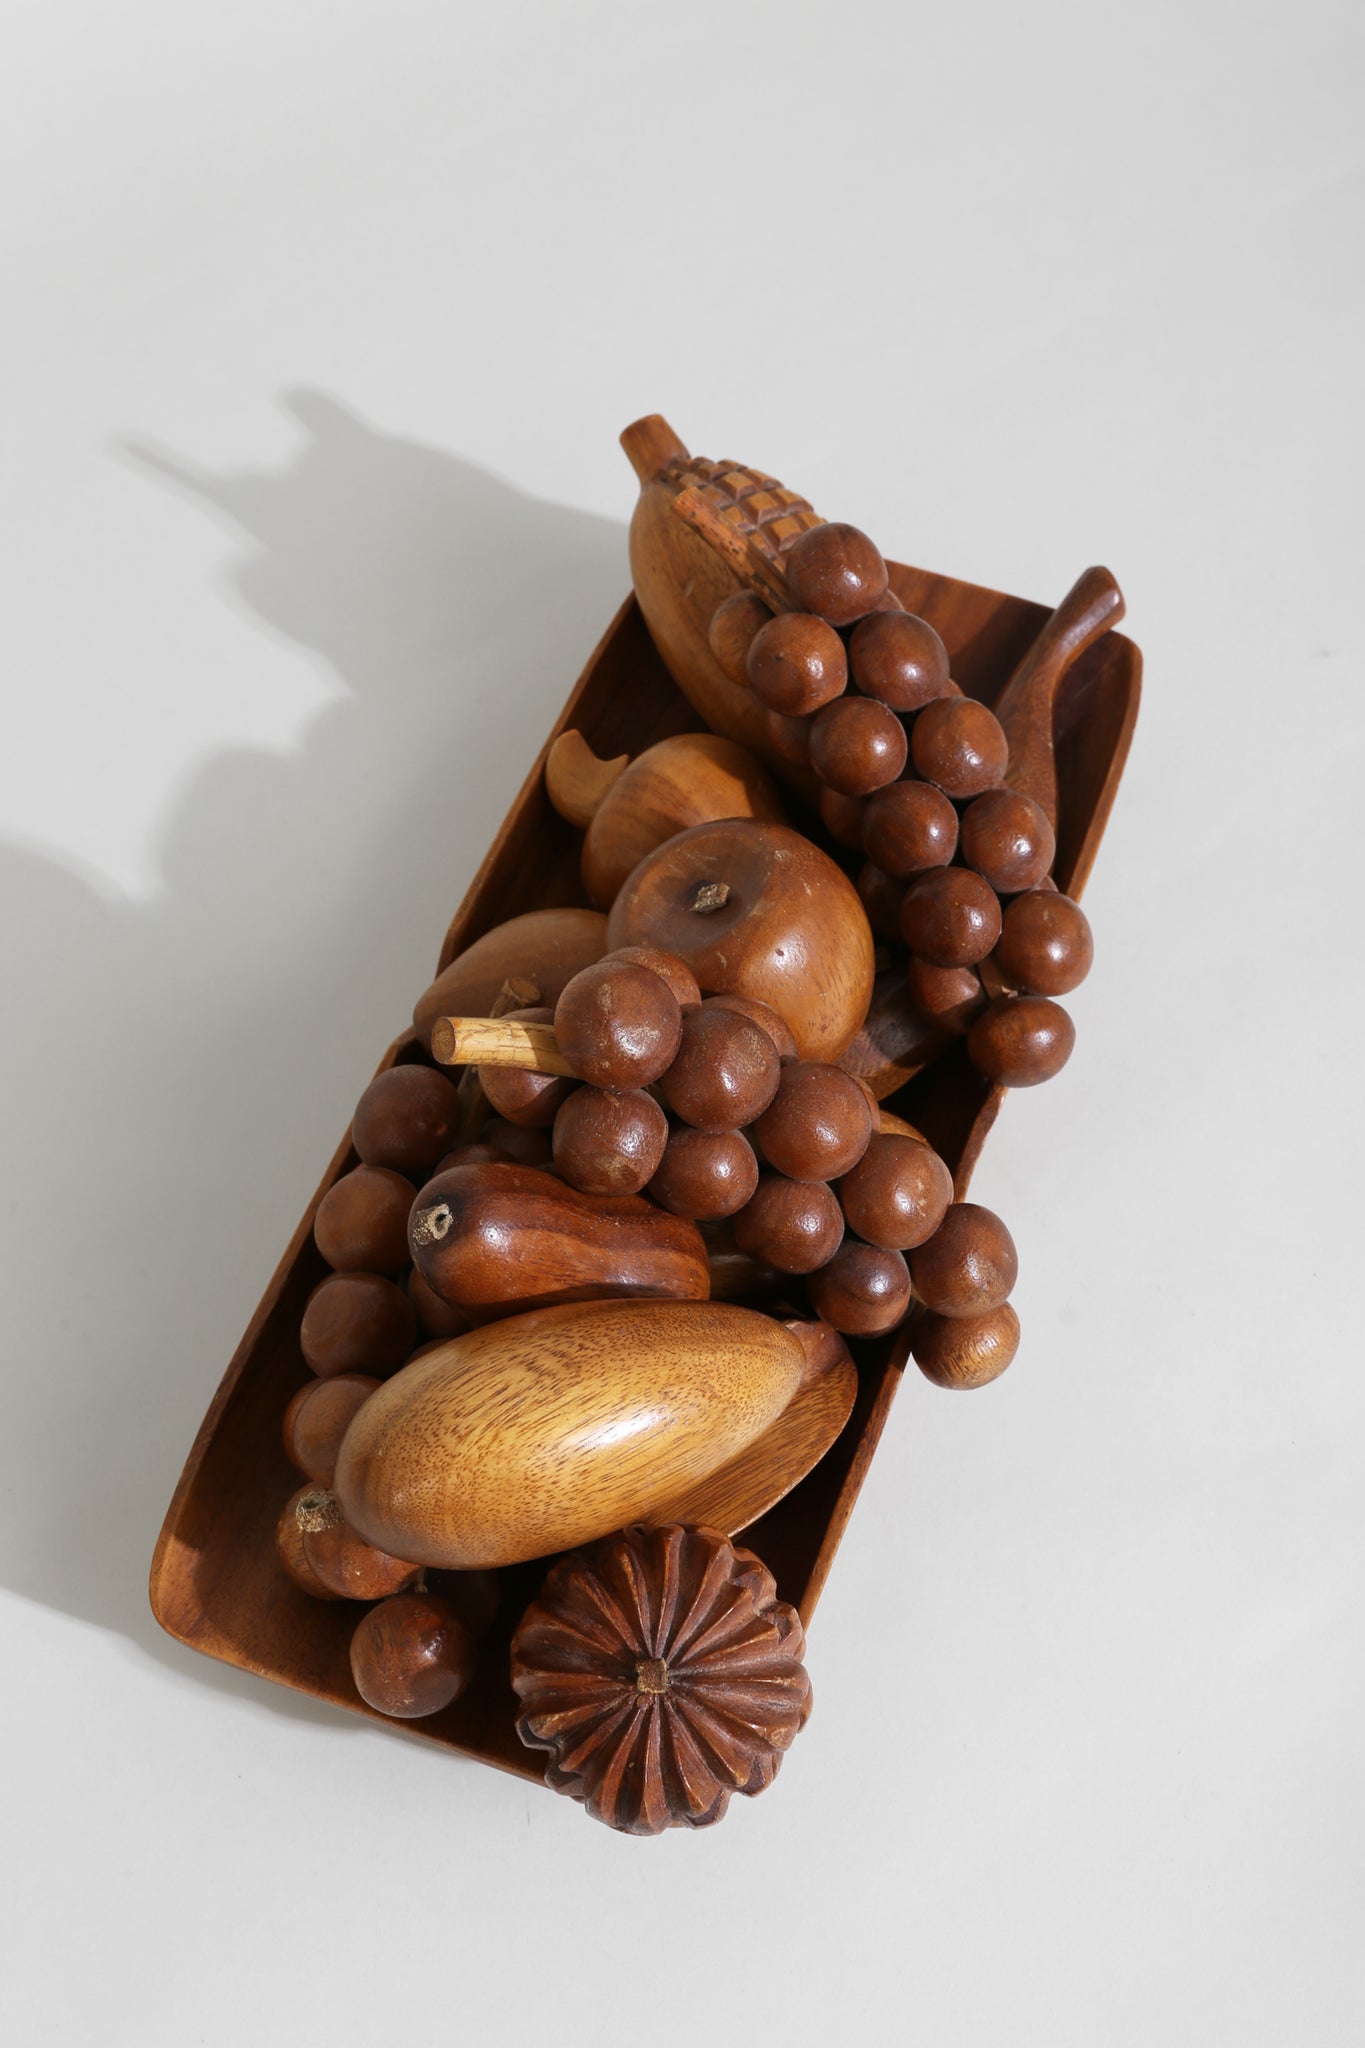 Carved Wooden Fruits + Bowl